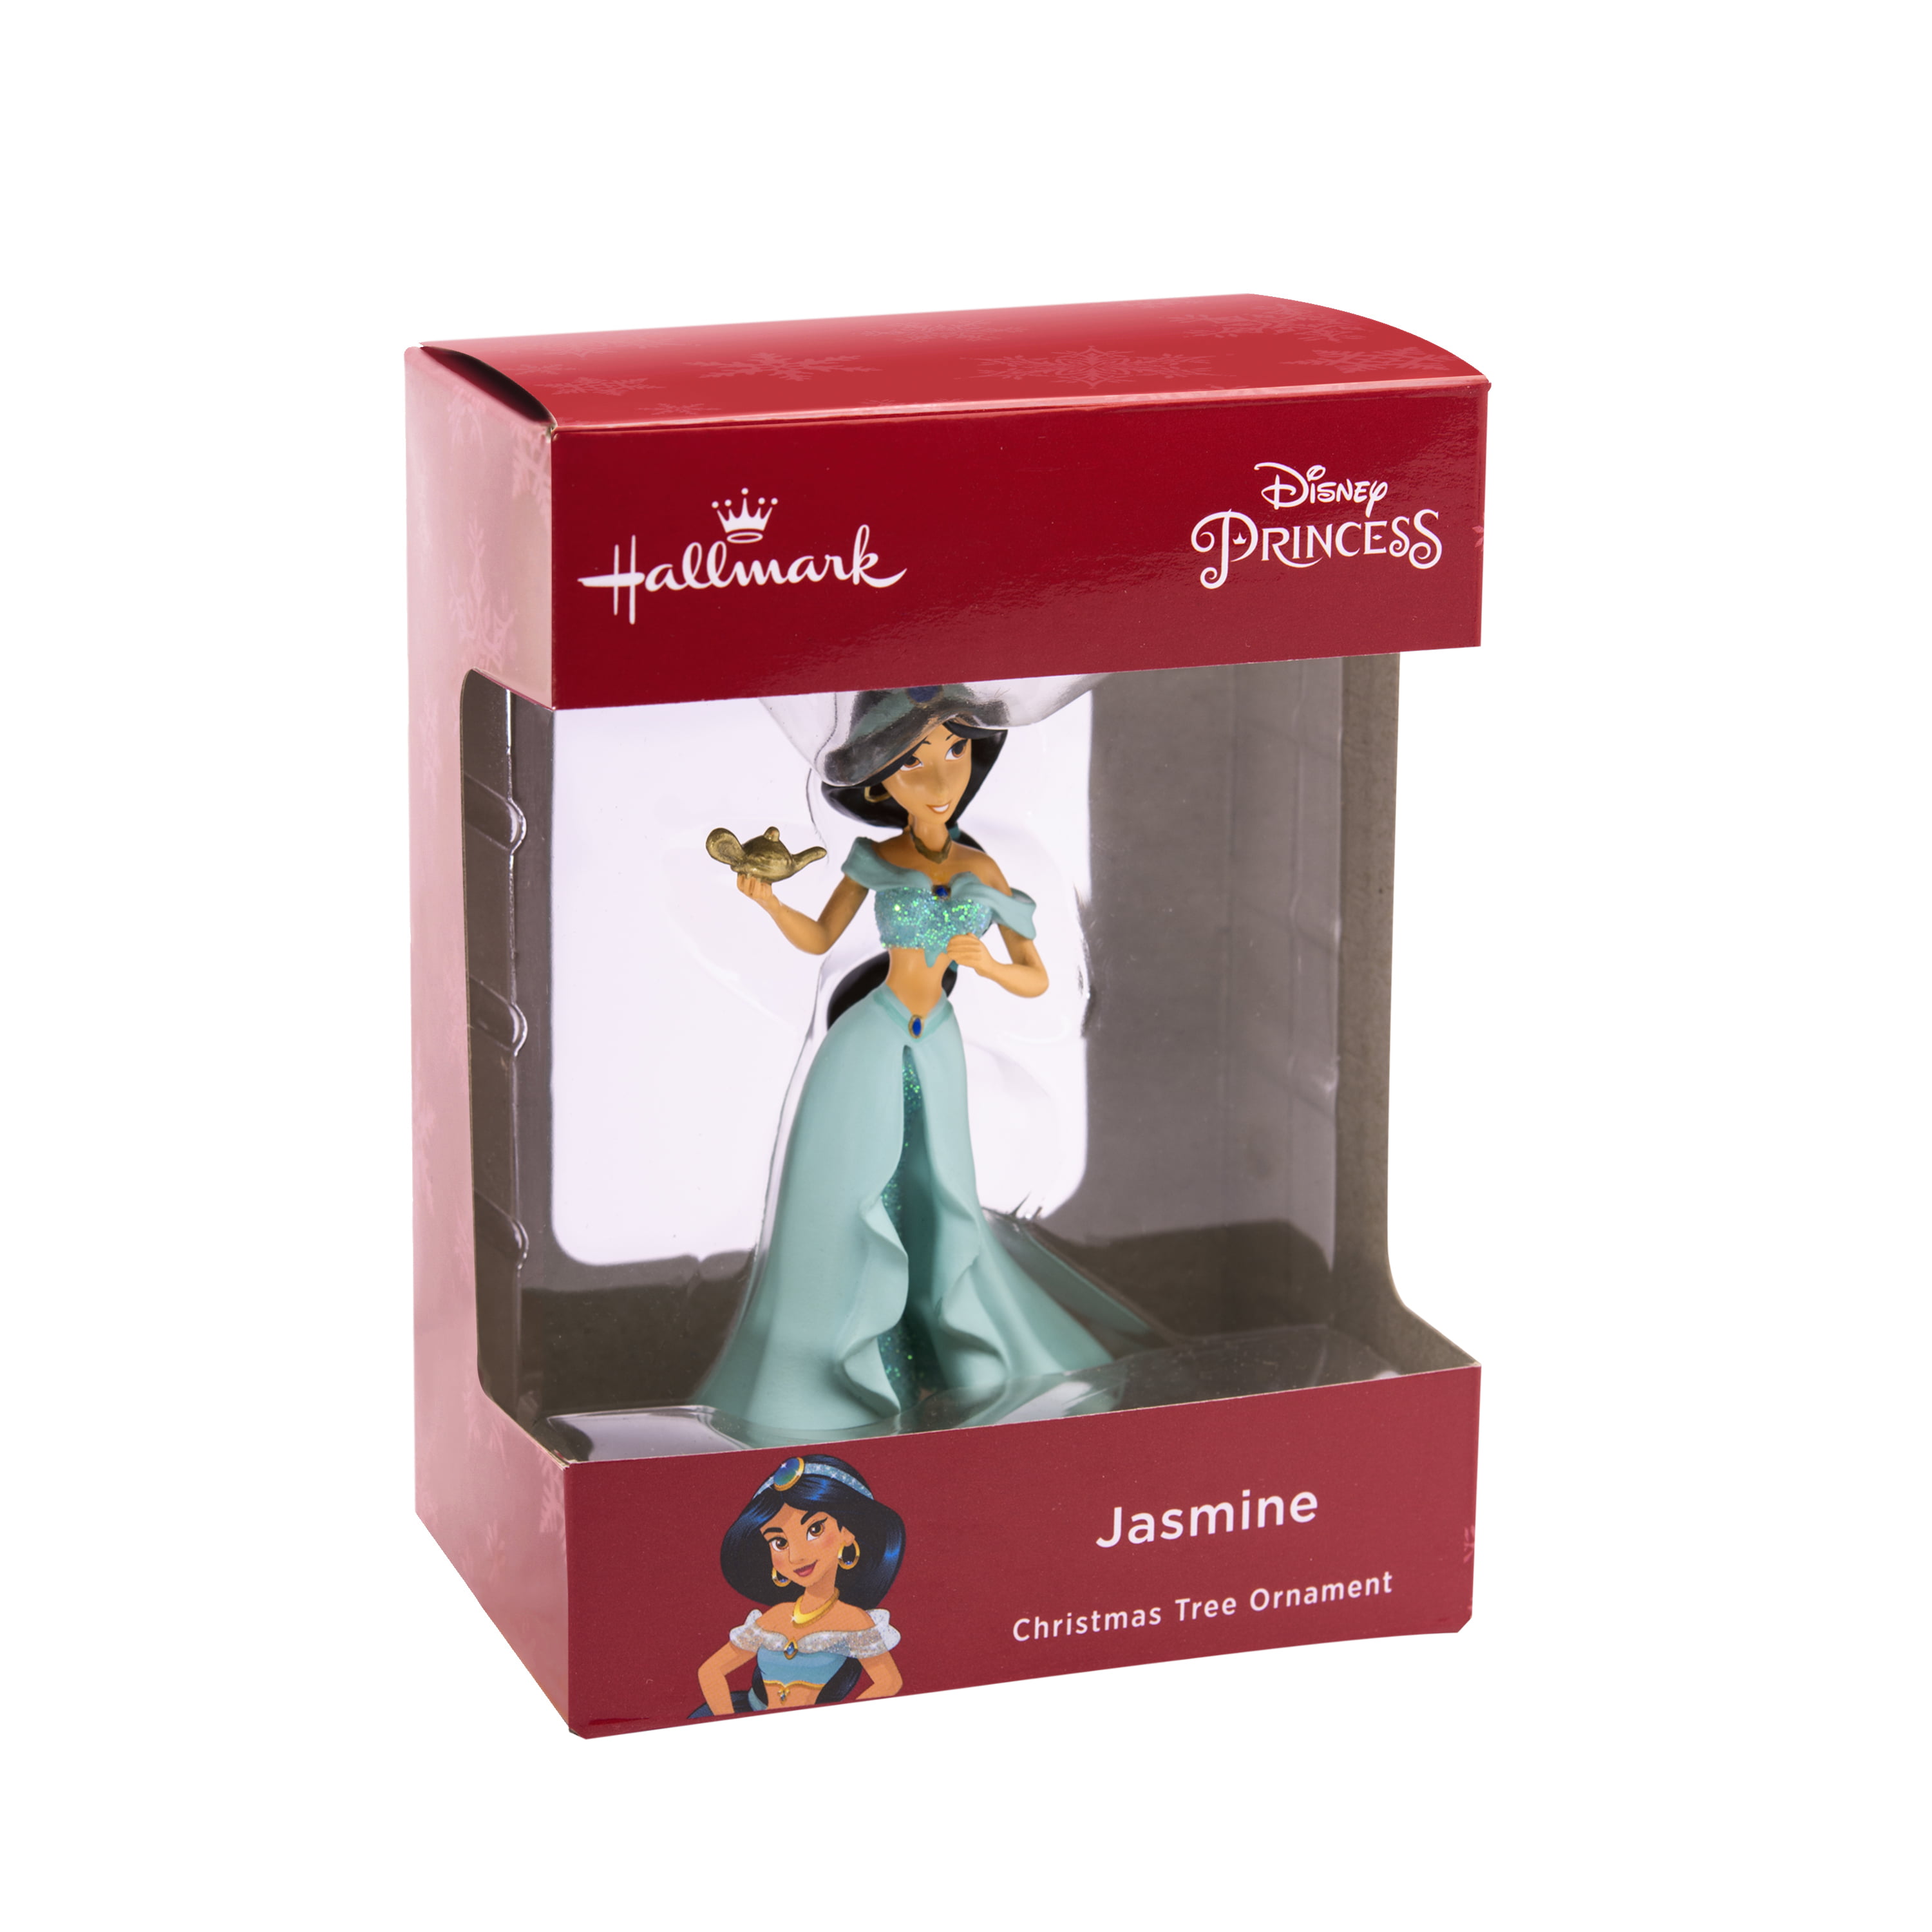 Details about   Hallmark 2019 Disney Princess Jasmine Christmas Tree Ornament Free Shipping 